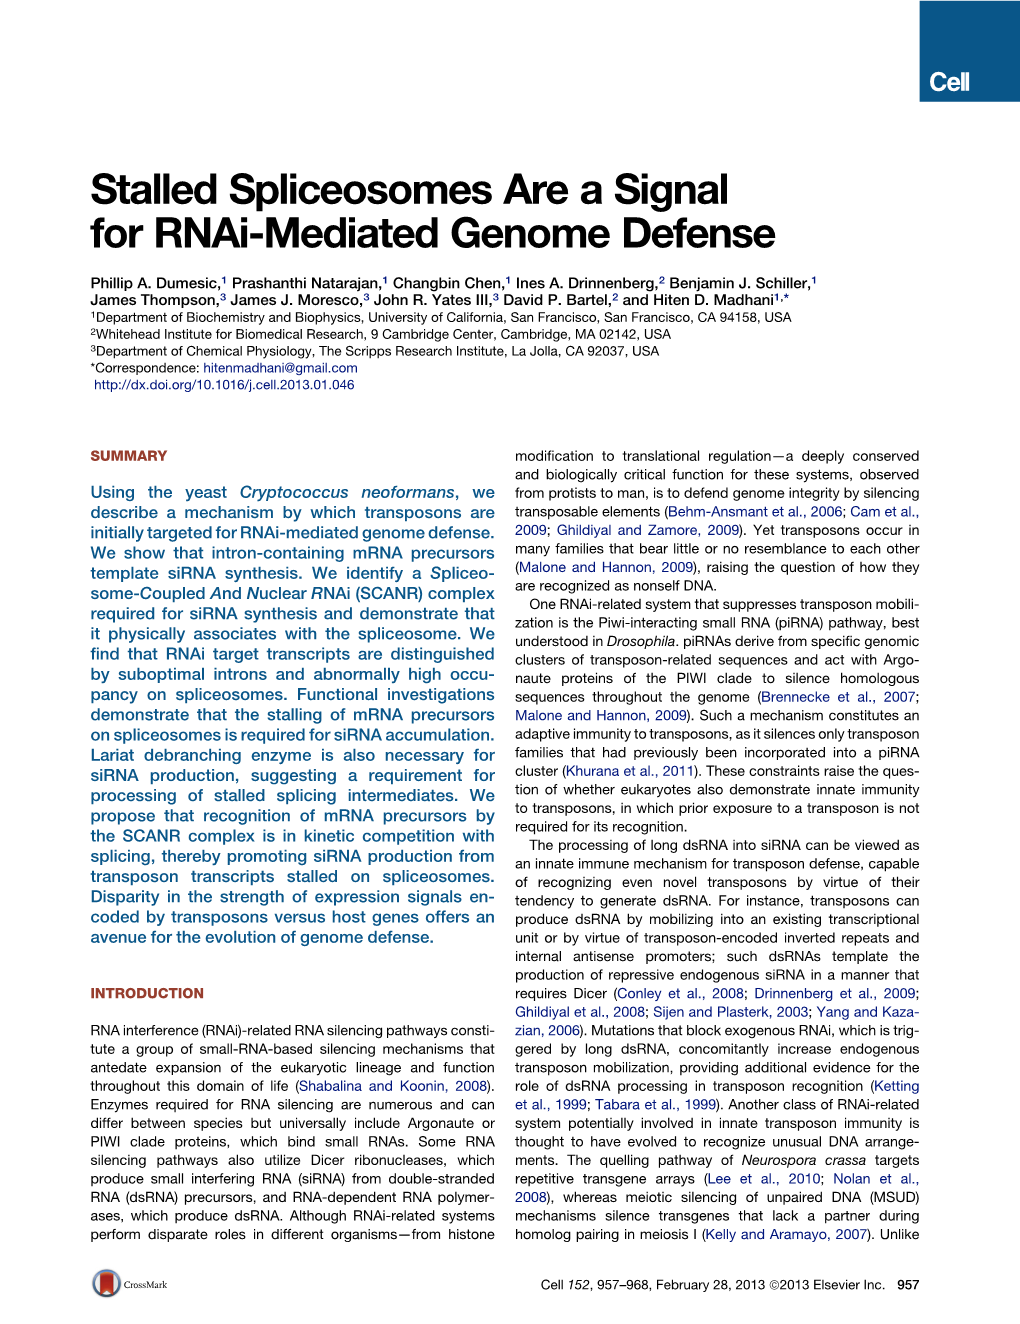 Stalled Spliceosomes Are a Signal for Rnai-Mediated Genome Defense